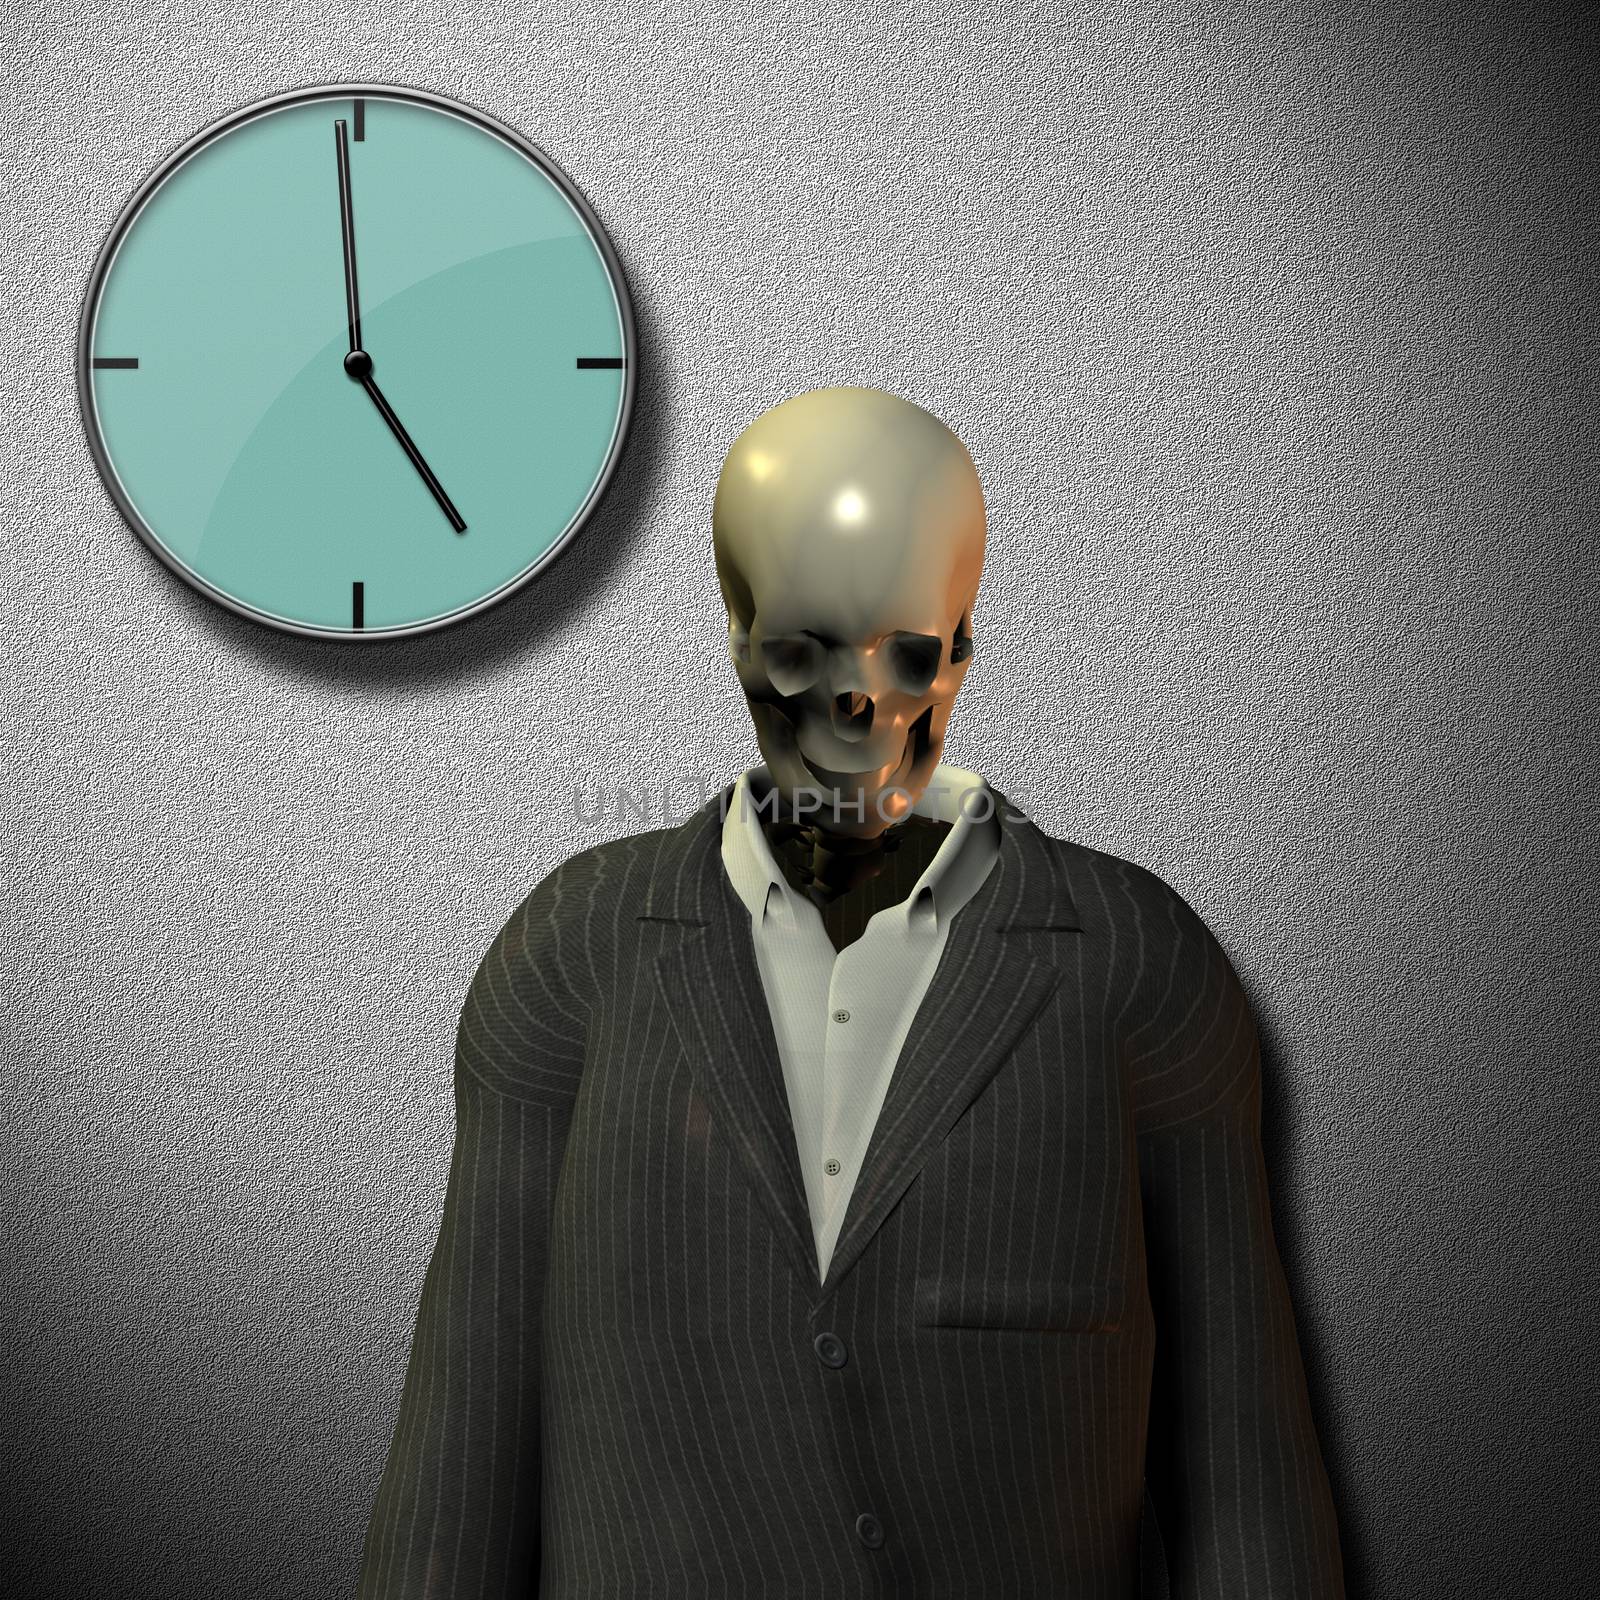 Ticking clock of life. Skeleton in suit